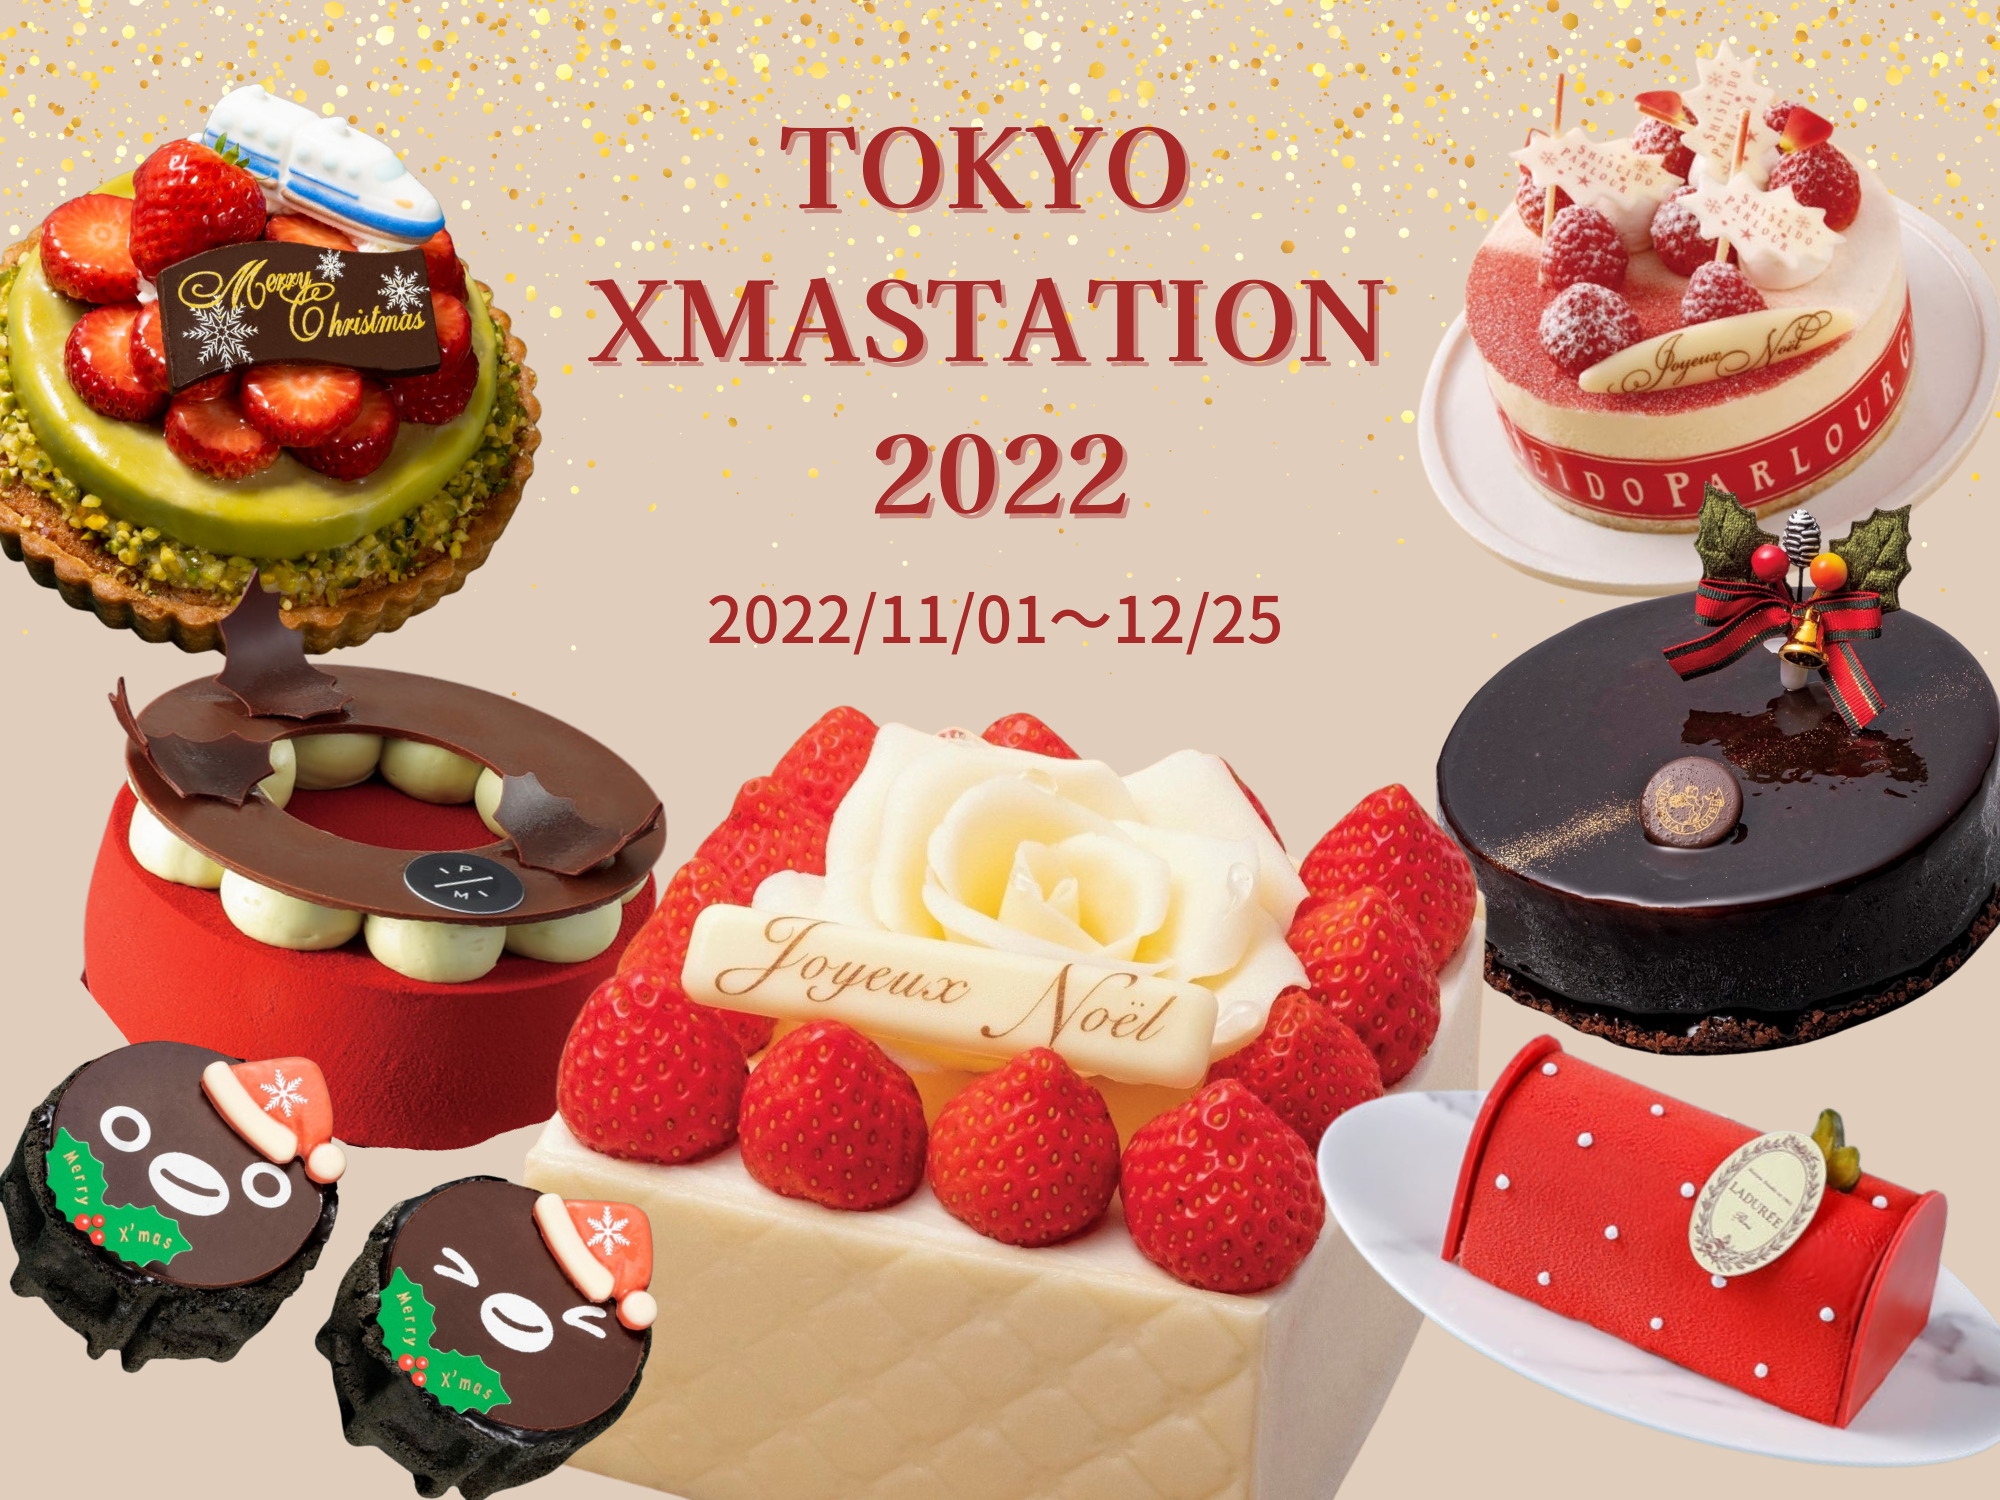 Tokyo Xmastation 22 クリスマスケーキはもう決めた 東京駅で買えるホカンスにもおすすめのケーキ11選 トレンドお届けメディア Trepo トレポ